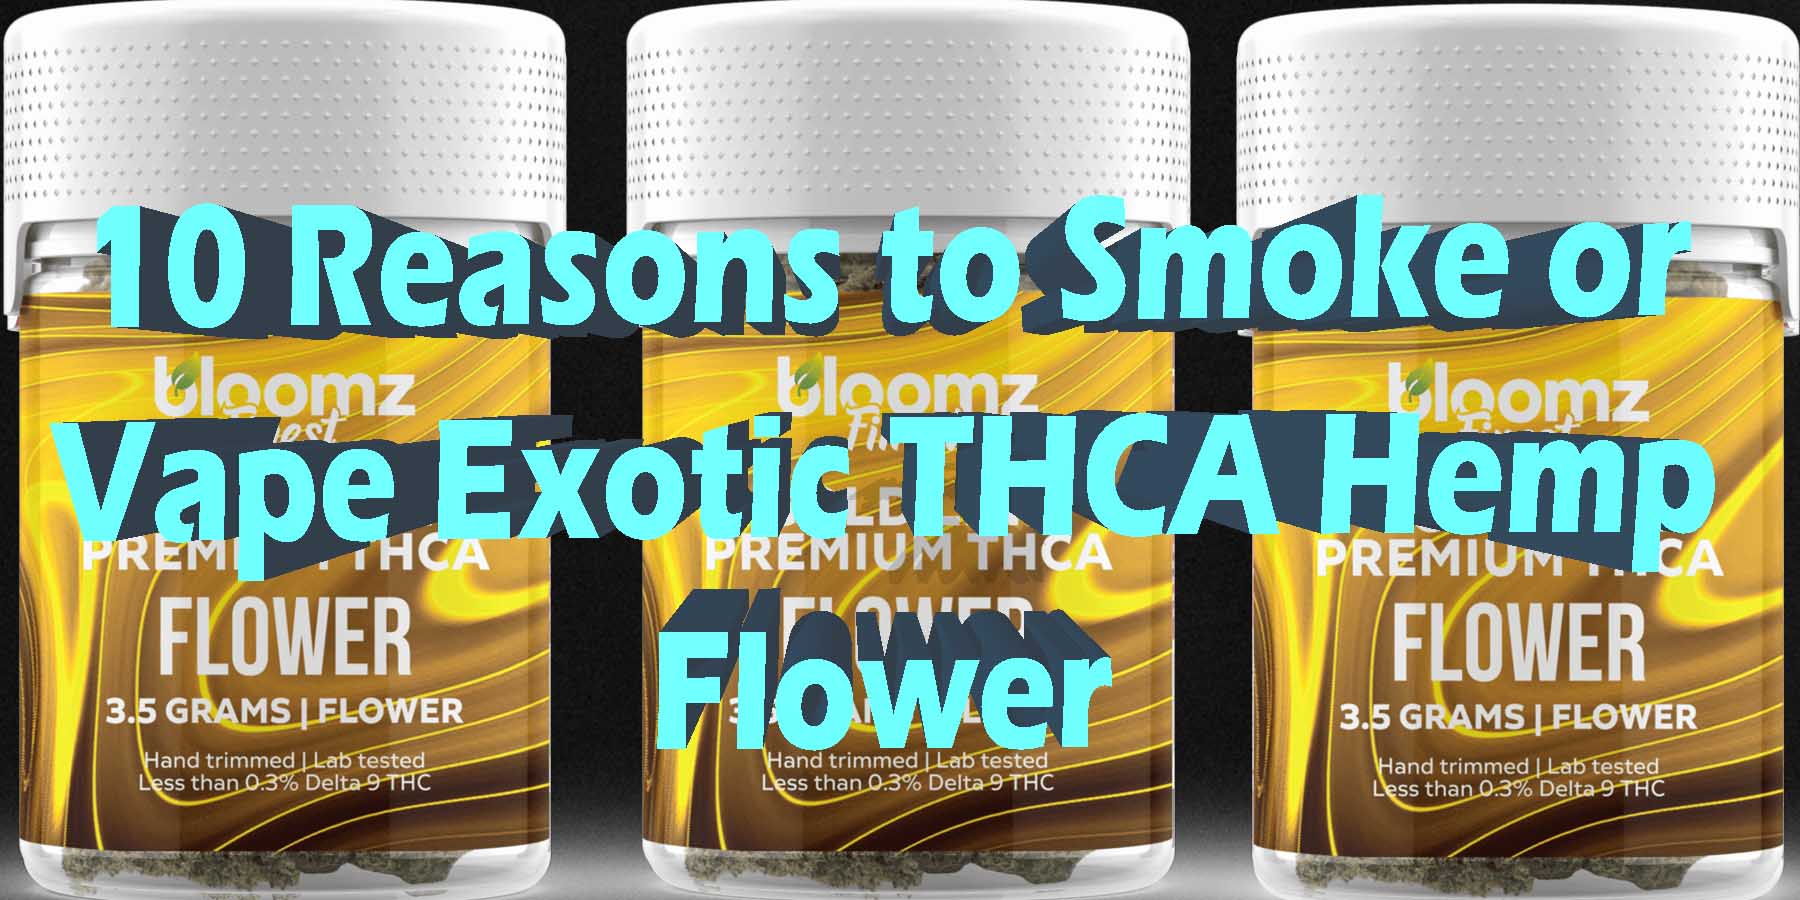 10 Reasons to Smoke or Vape Exotic THCA Hemp Flower GoodPrice GetNearMe LowestCoupon DiscountStore Shoponline VapeCarts Online StrongestSmoke ShopBinoid THC